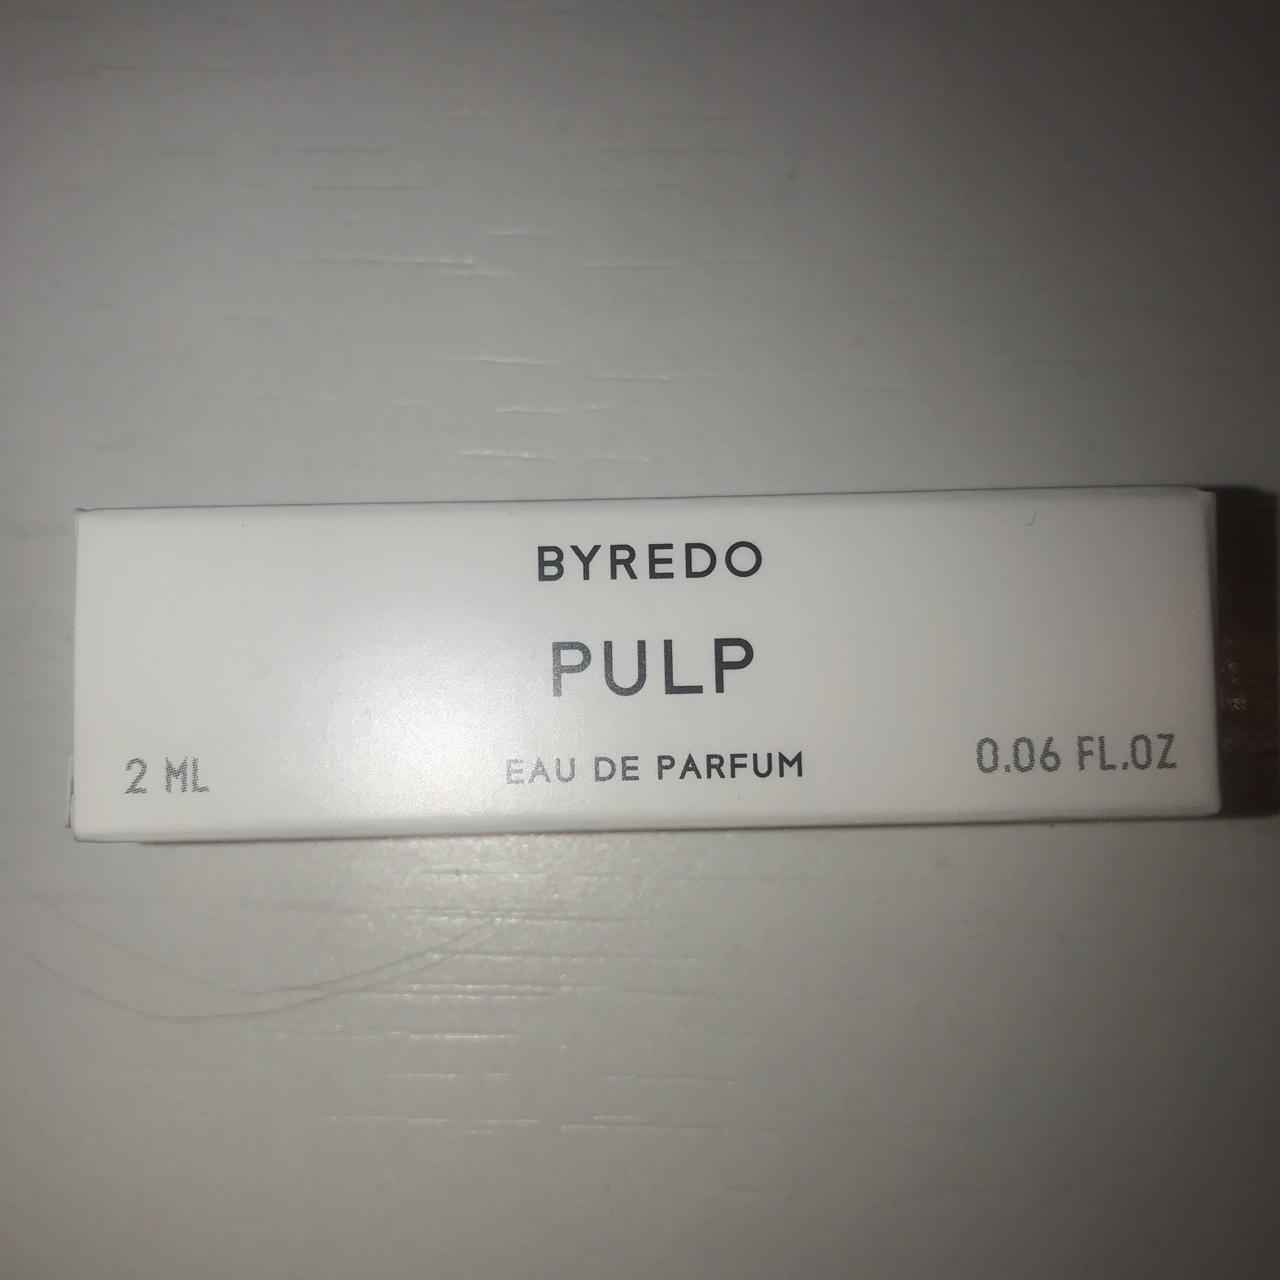 Product Image 1 - Pulp 
Byredo 
Bundle pink’n’mix 3